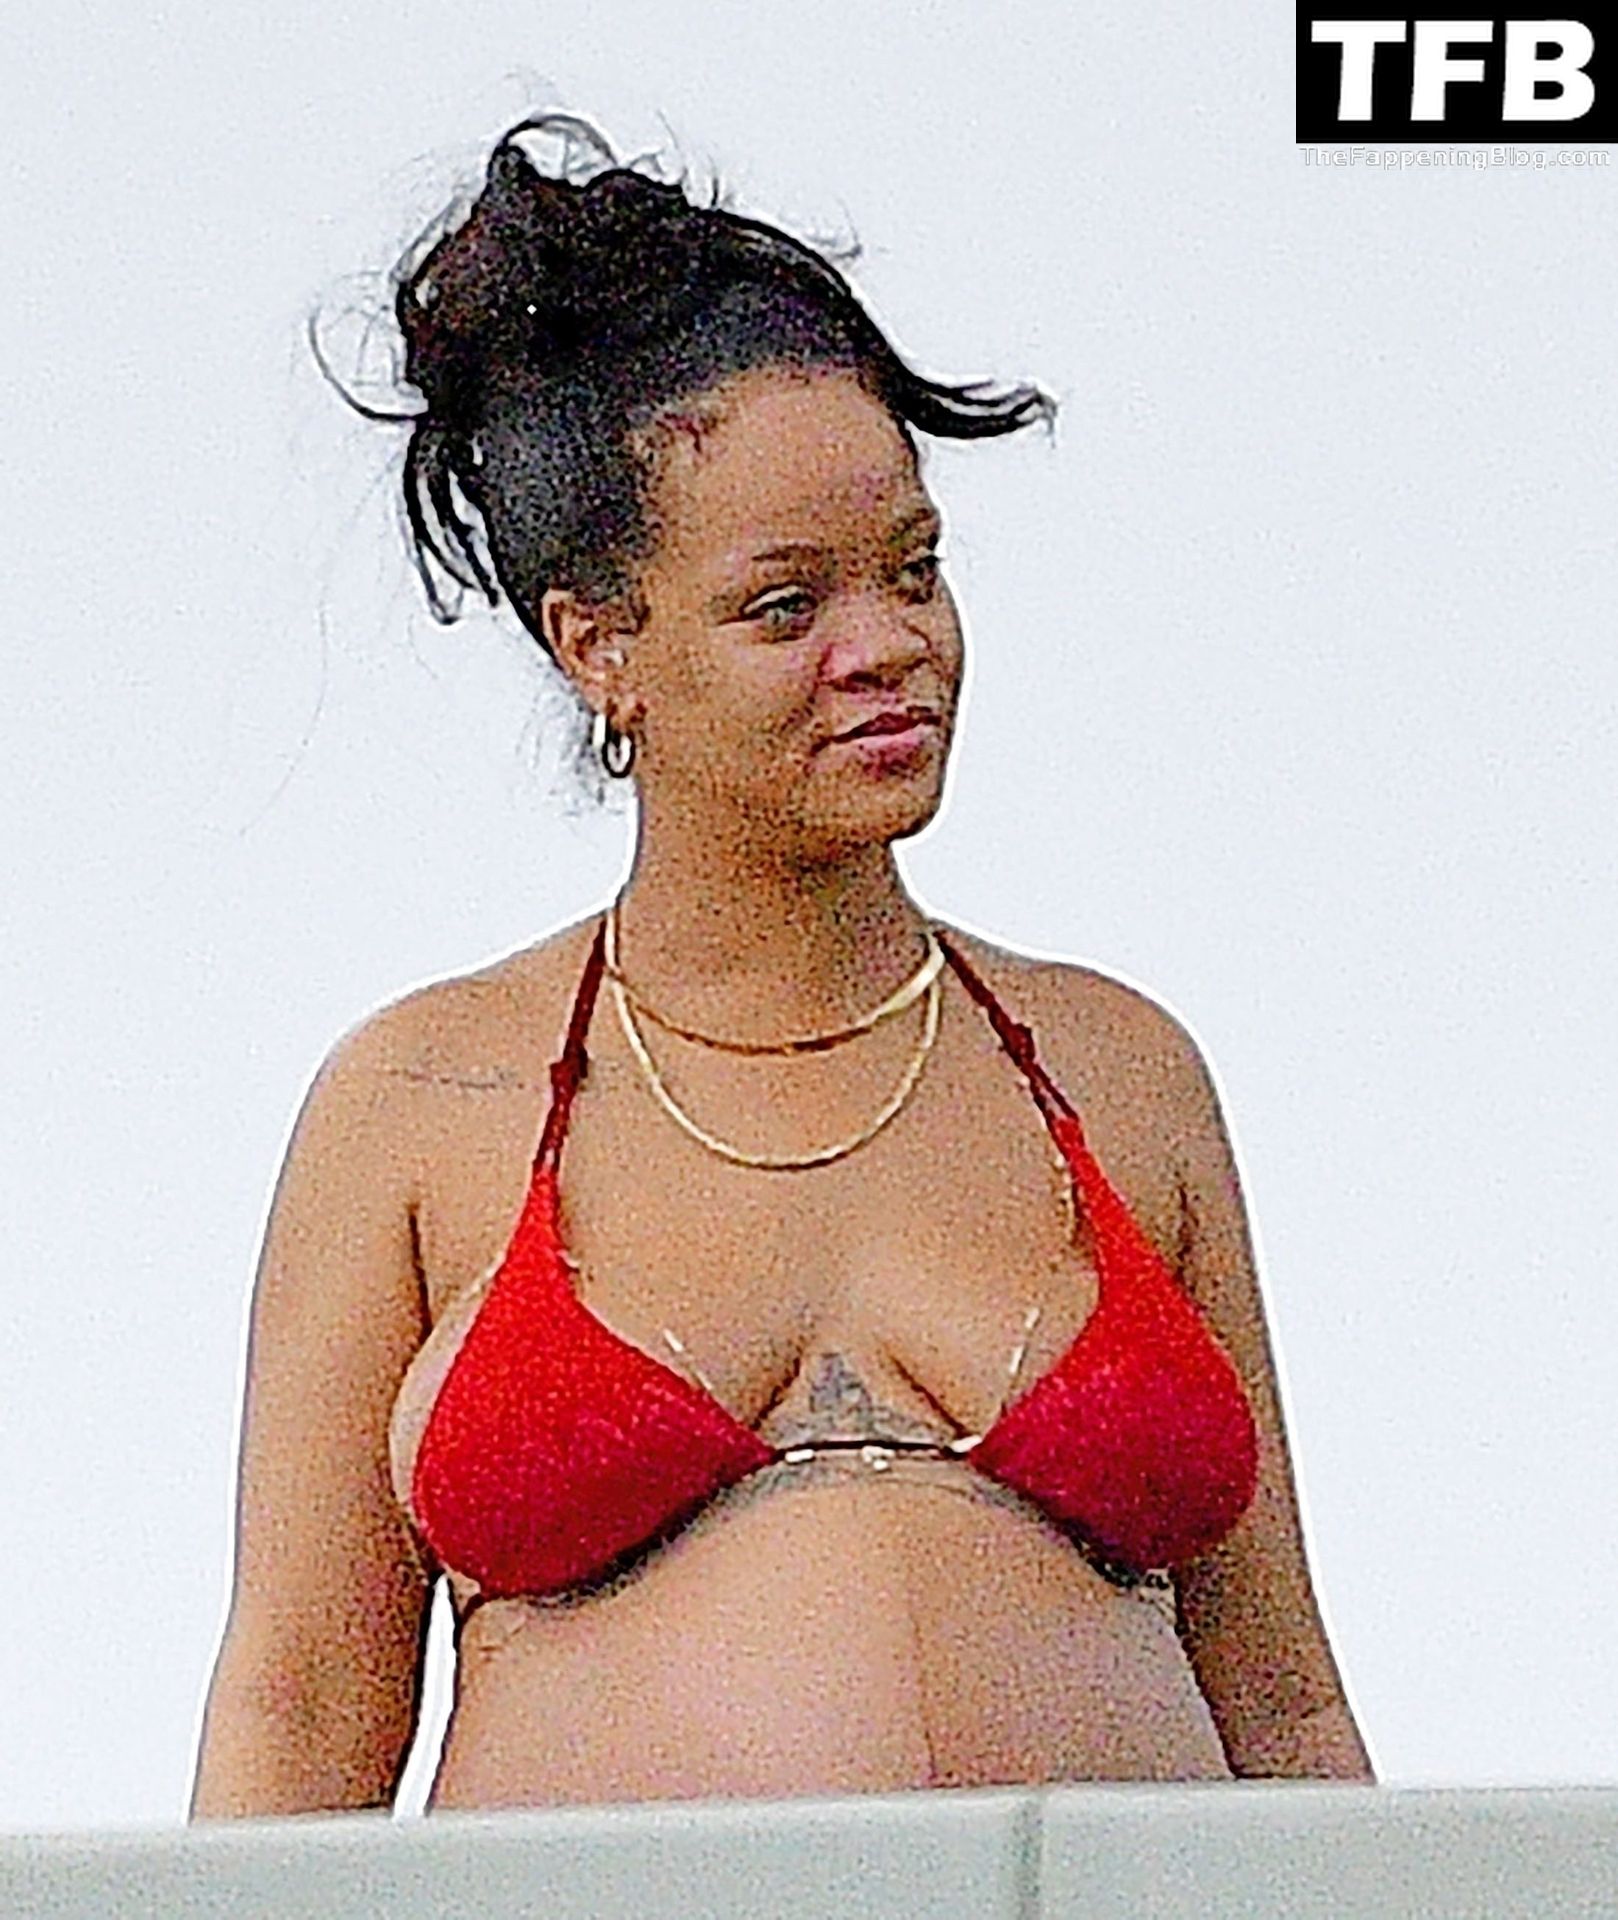 Rihanna-Sexy-The-Fappening-Blog-11-4.jpg